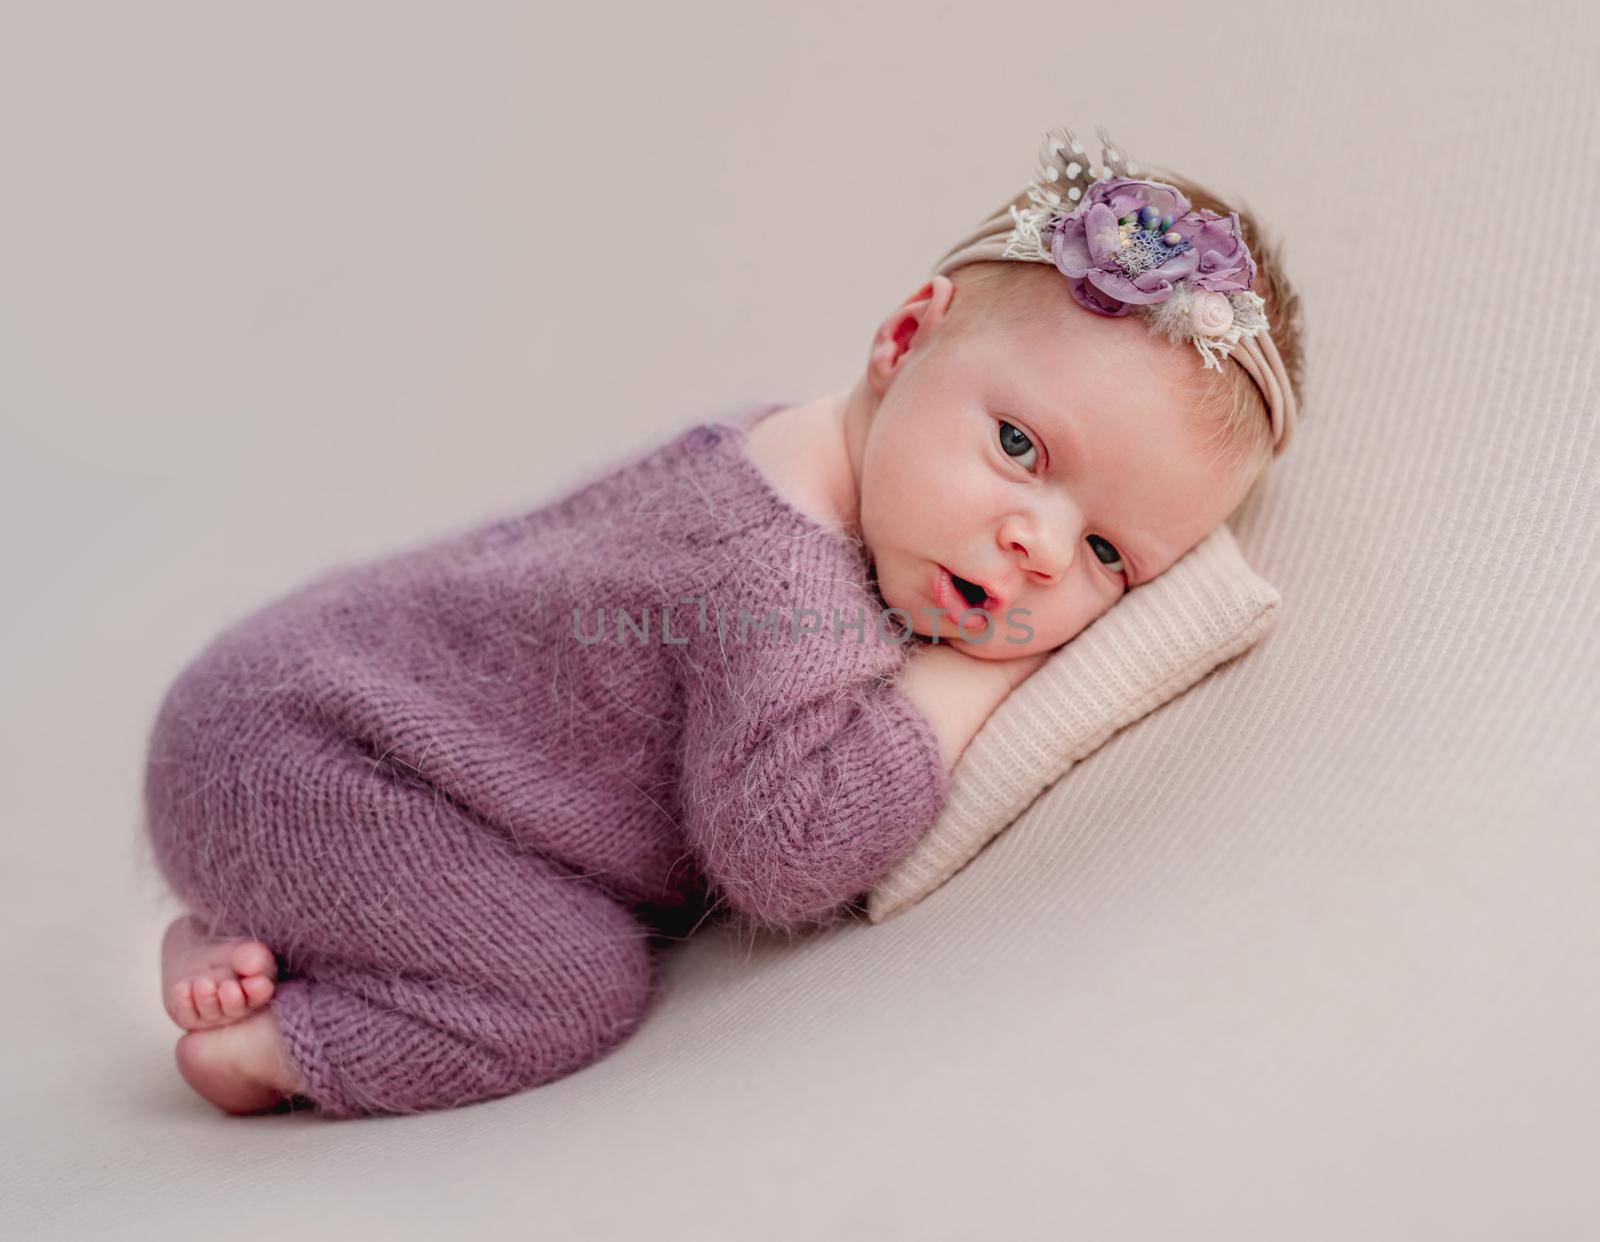 Awake newborn girl with flower diadem lying on tiny pillow